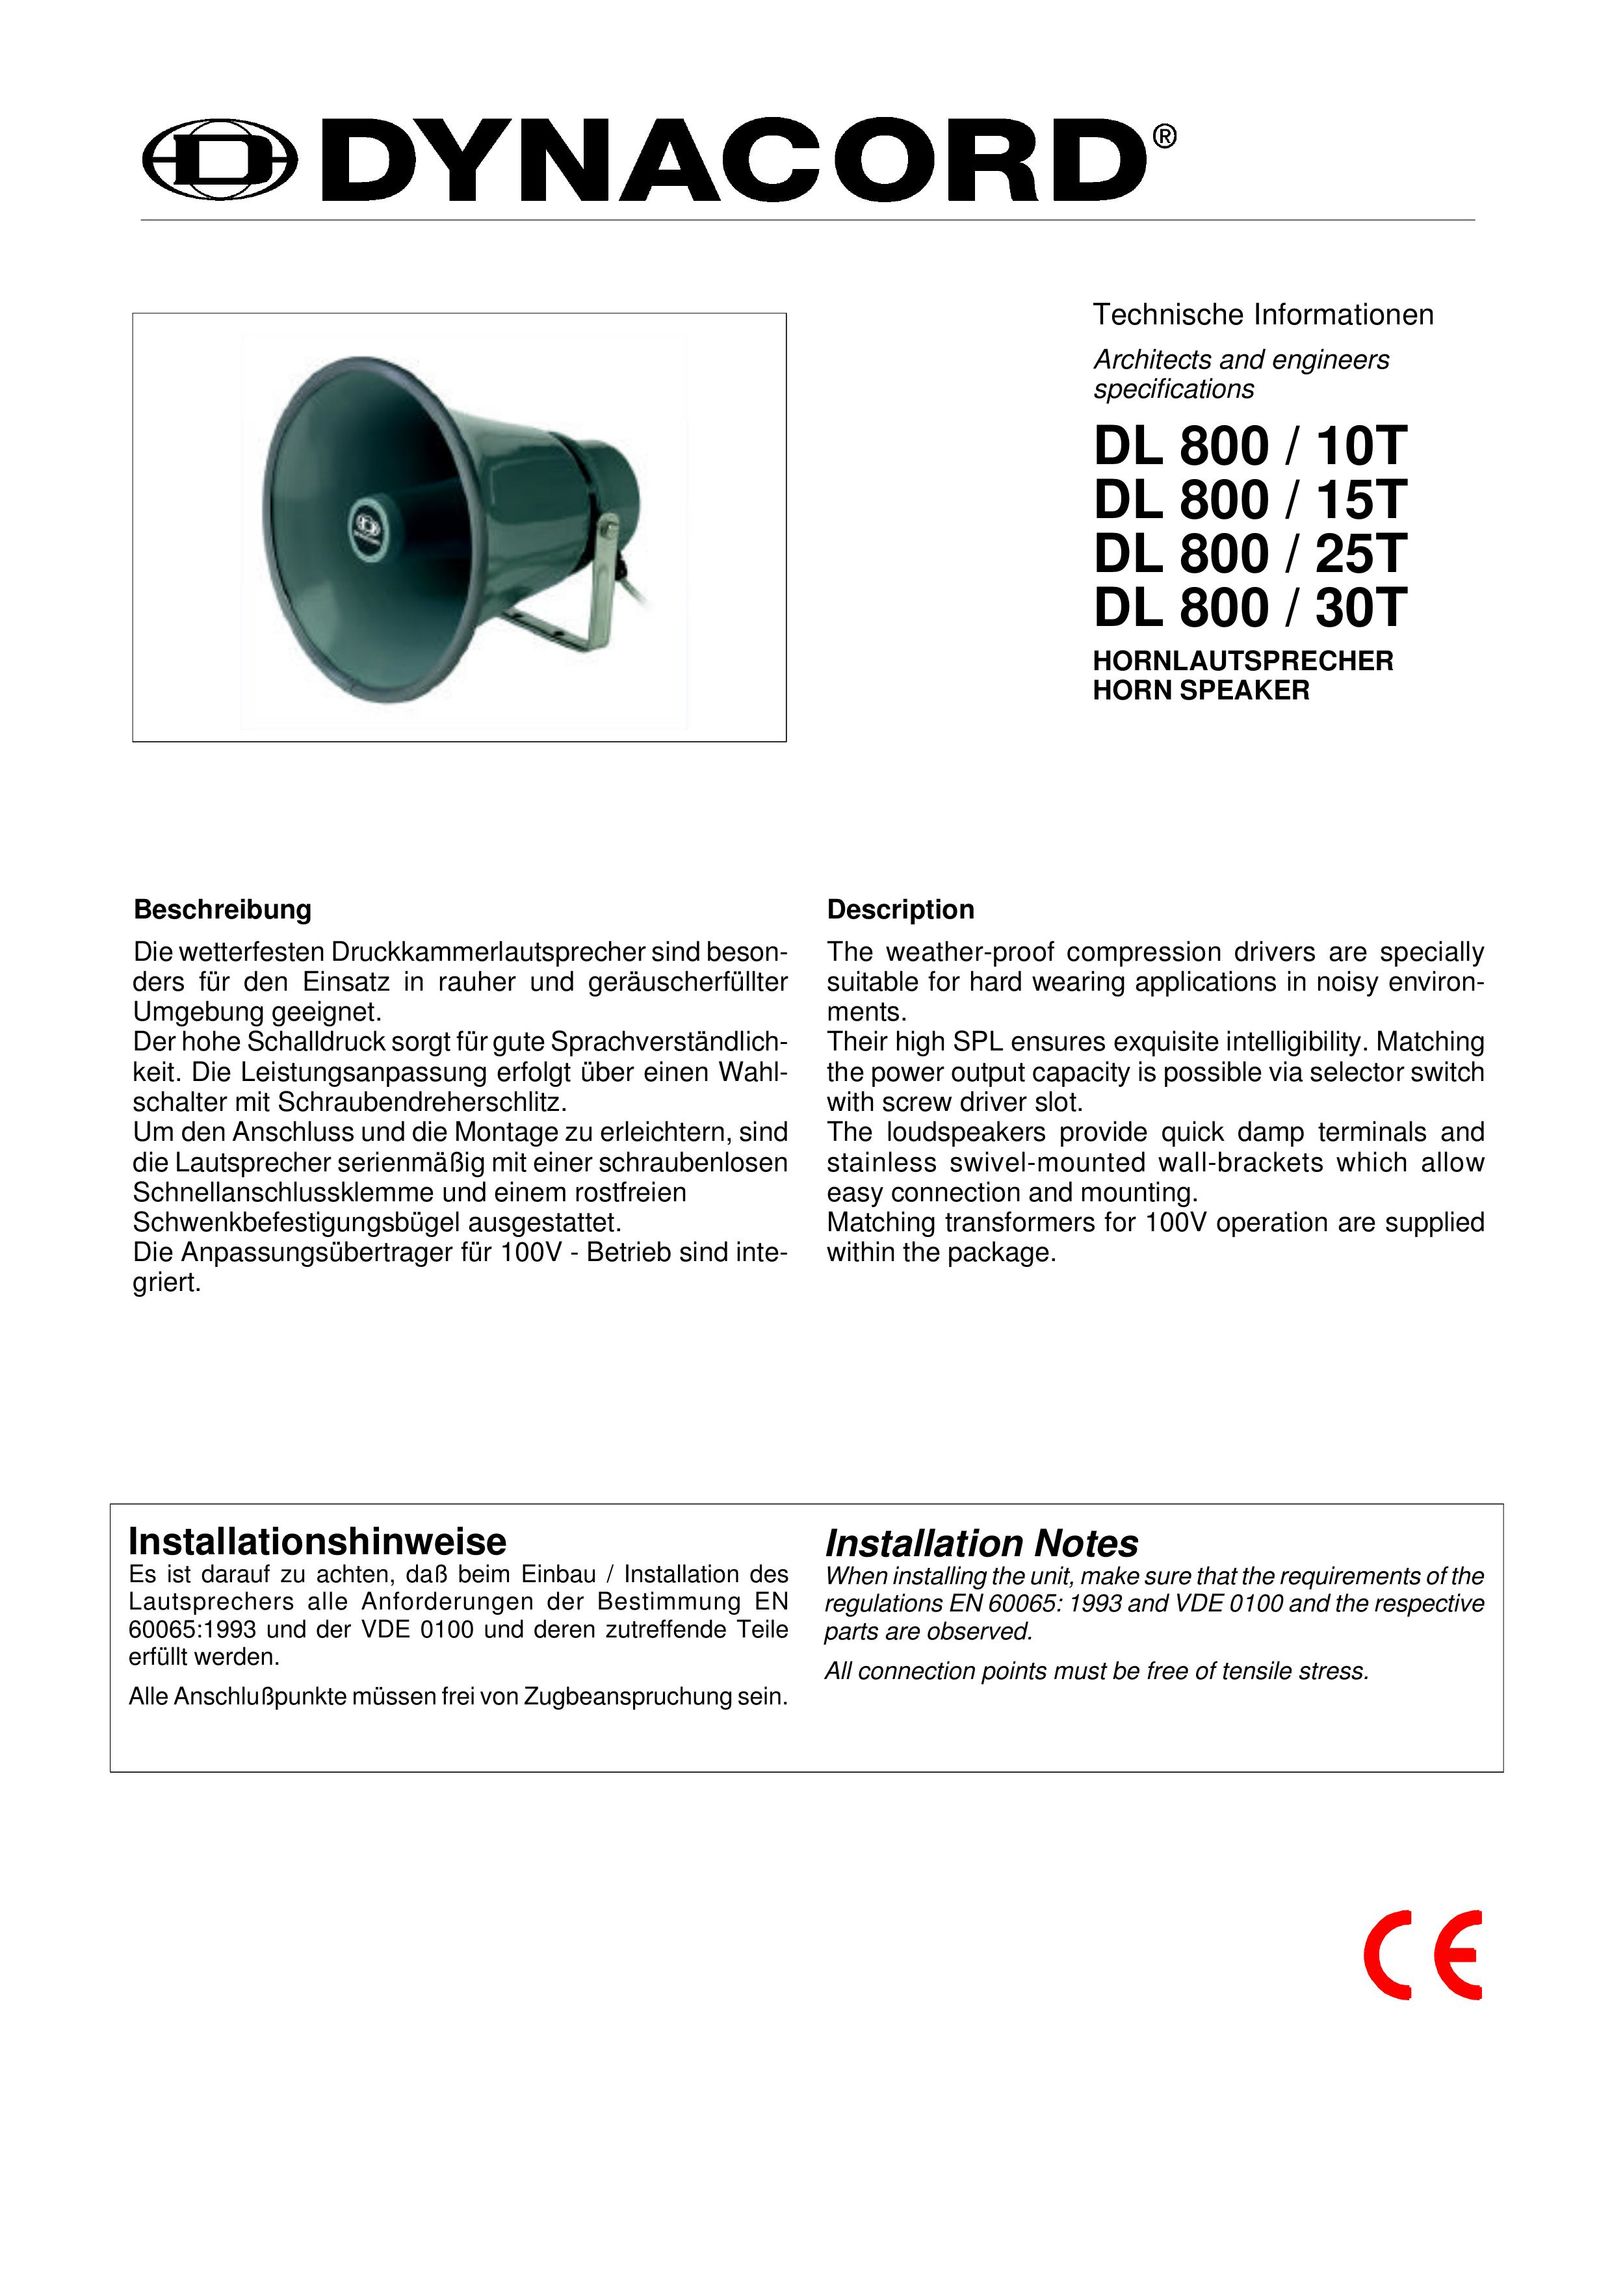 Dynacord DL 800 / 25T Speaker User Manual